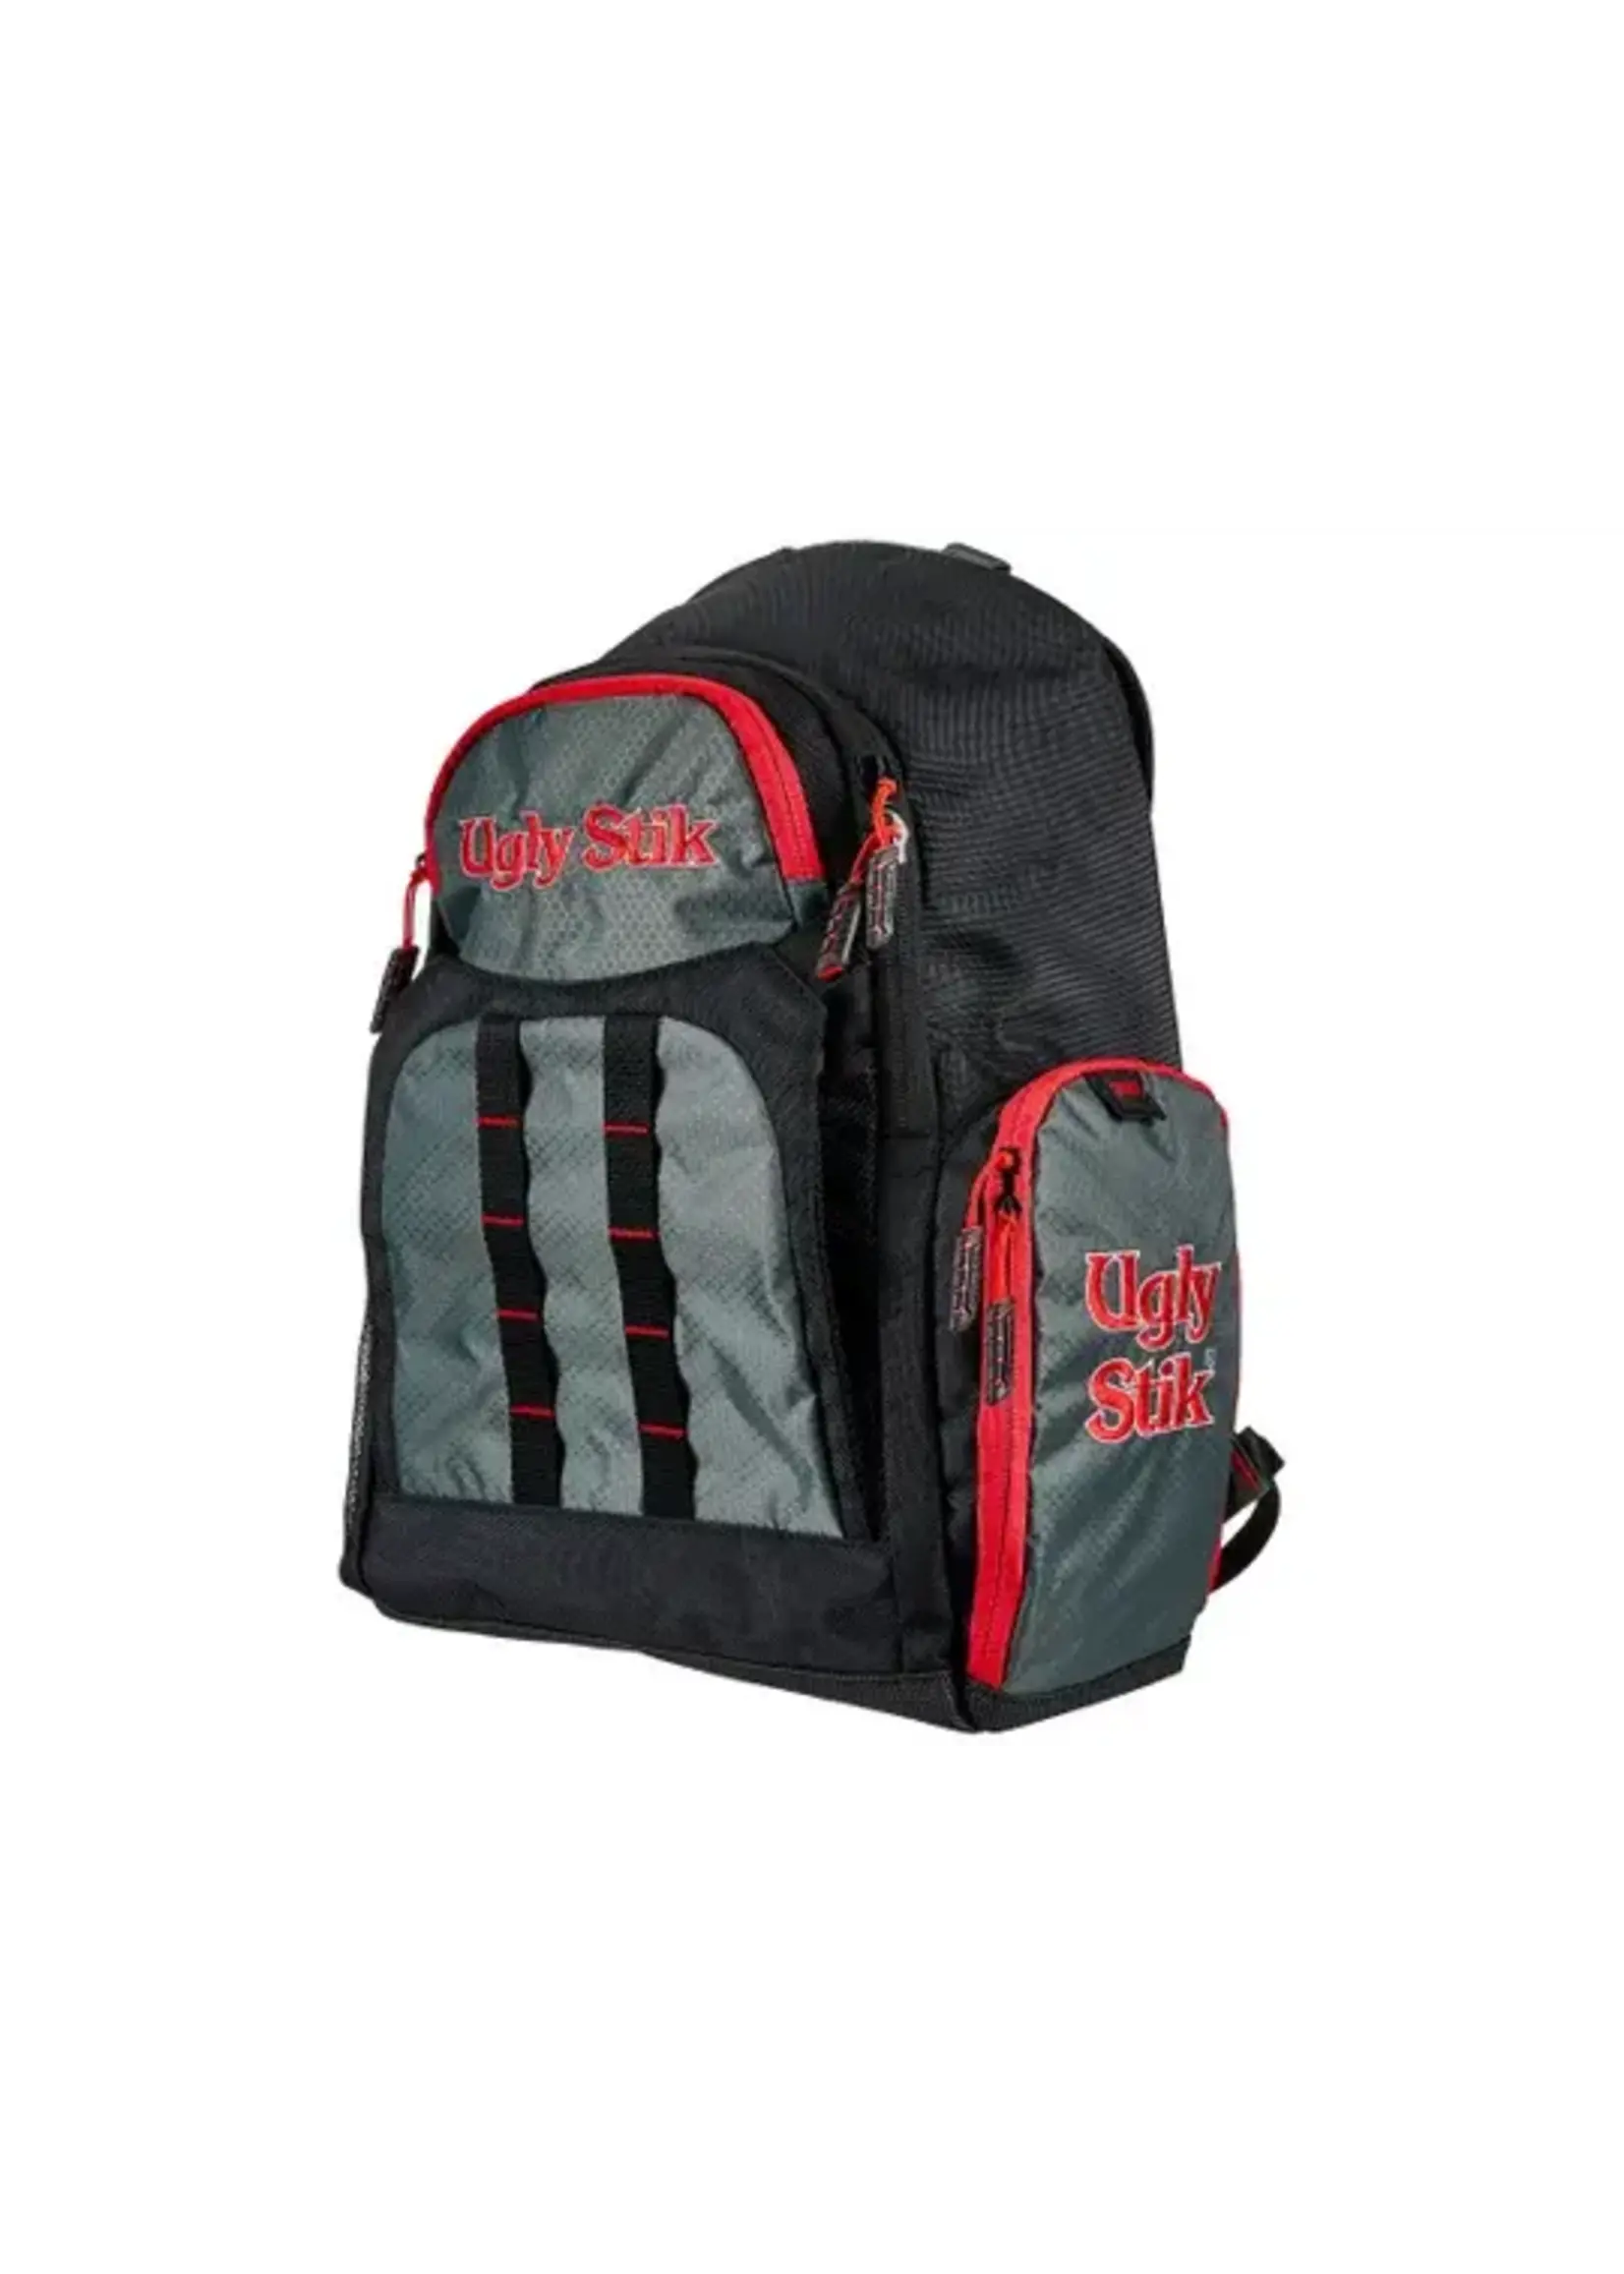 Ugly Stik Ugly Stik 3600 Backpack